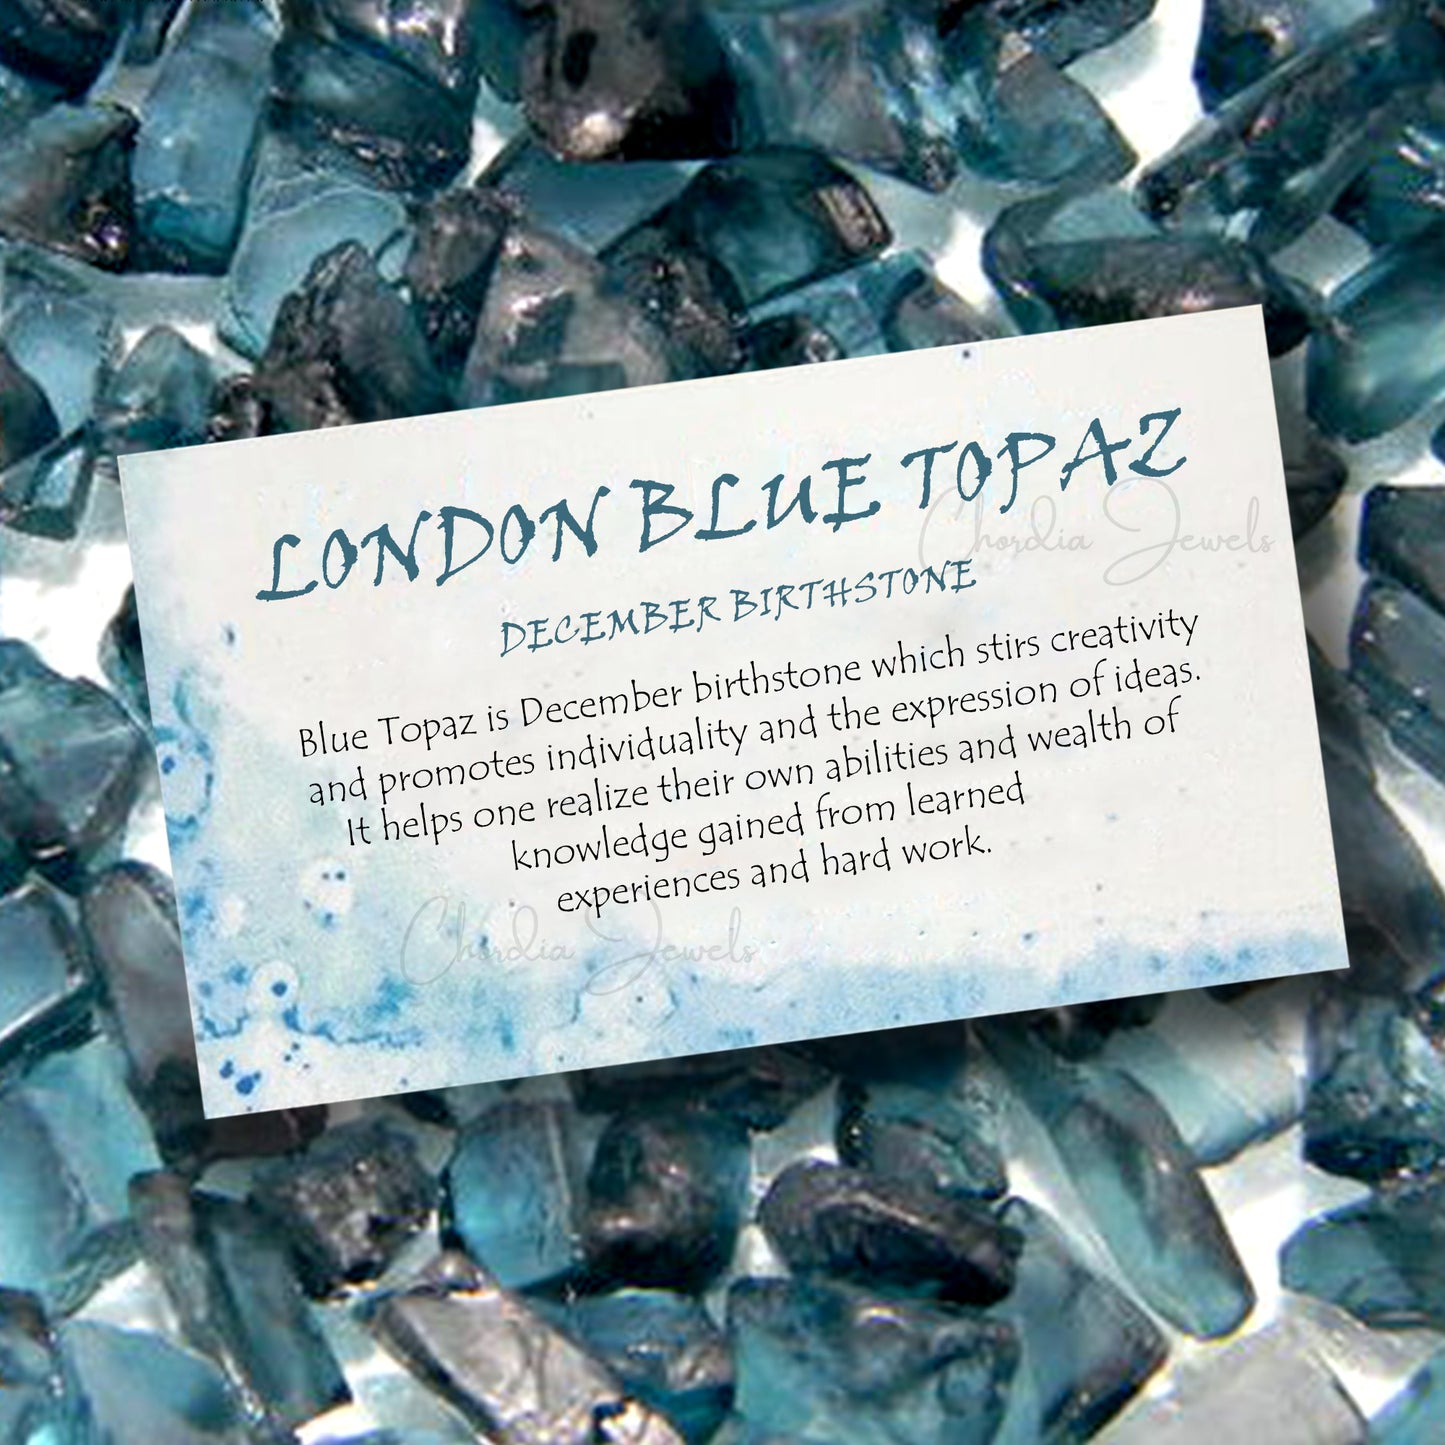 Genuine London Blue Topaz 6x4mm Pear Gemstone Dainty Ring 14k Real Gold White Diamond Promise Ring Hallmarked Jewelry